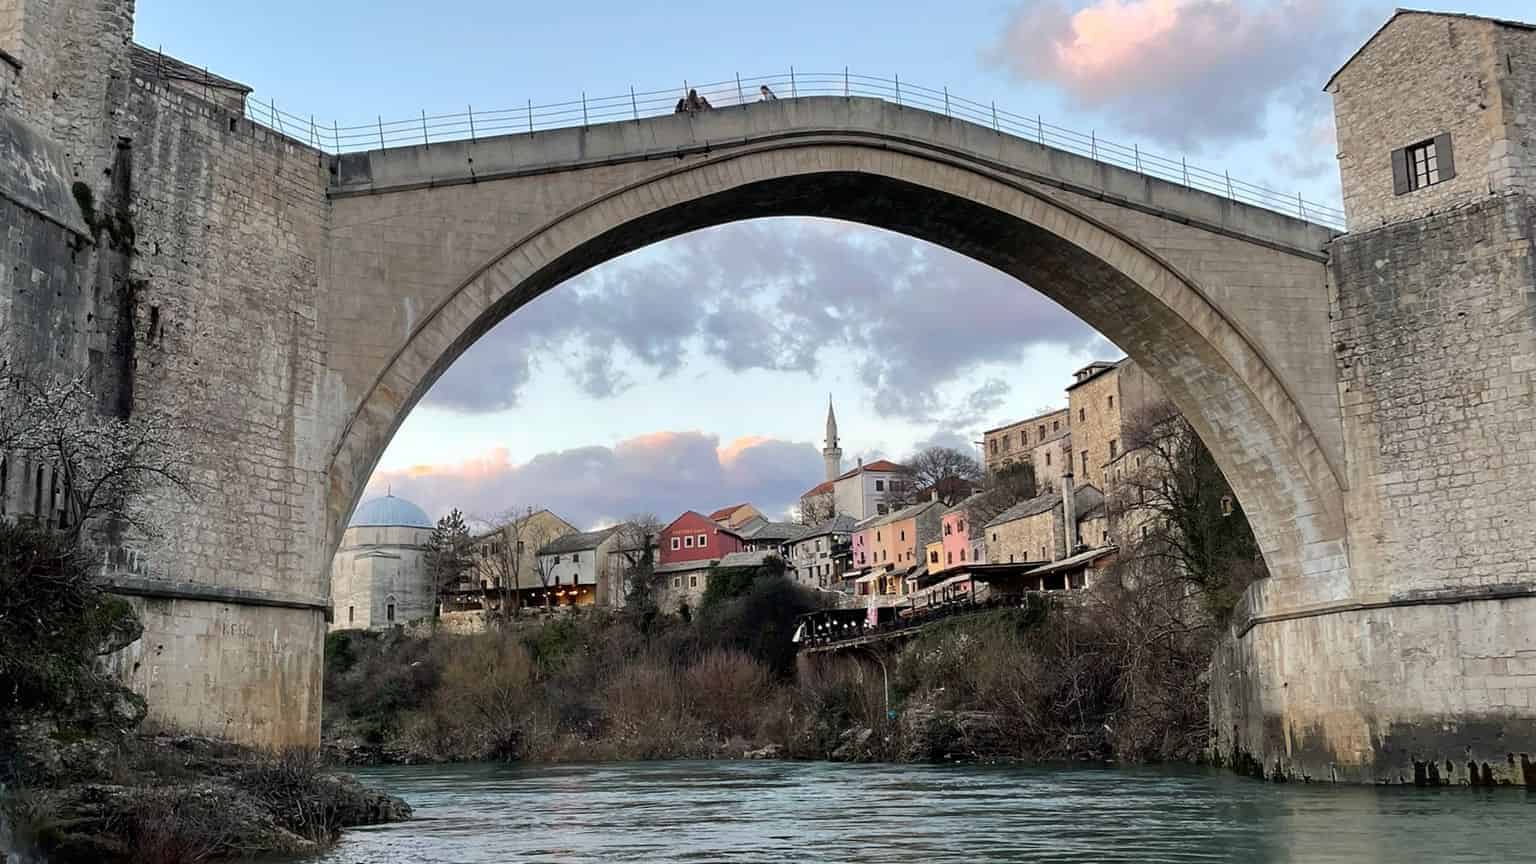 Stari Most, a famous bridge in Mostar, Bosnia Heregovina, standing over the Neretva River